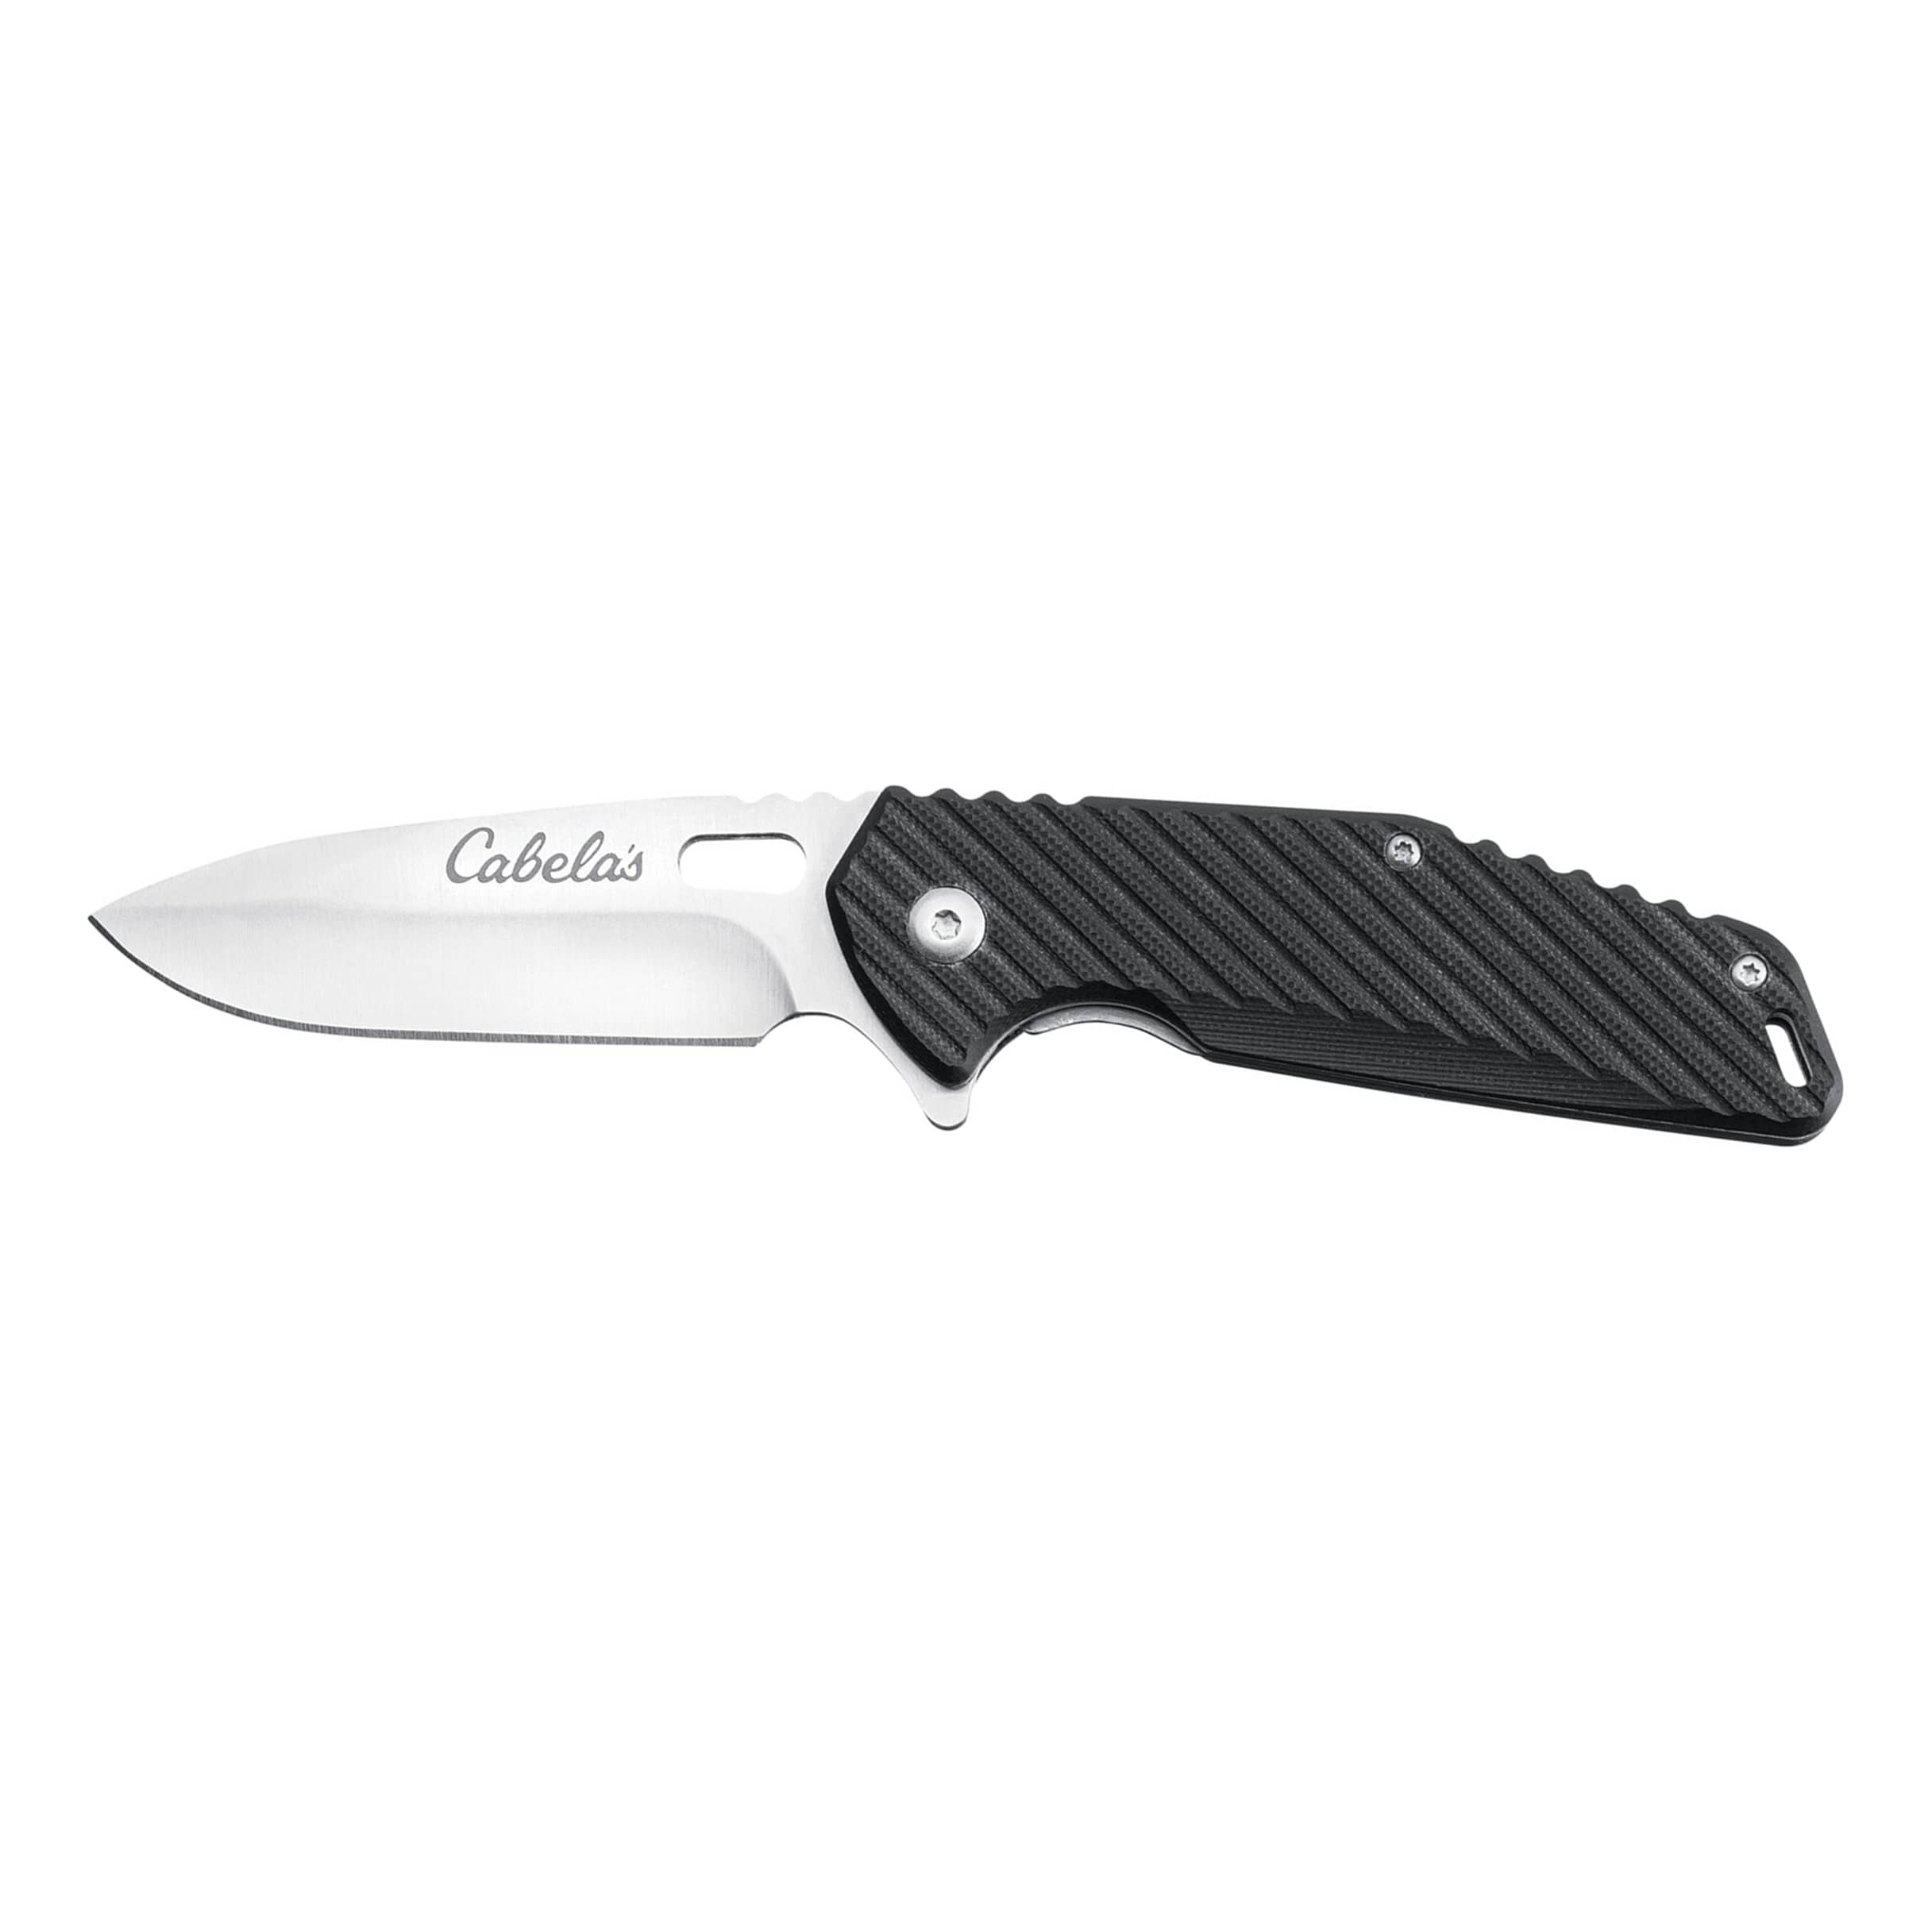 Cabela's Pocket Knife and Flashlight Combo - Knife View